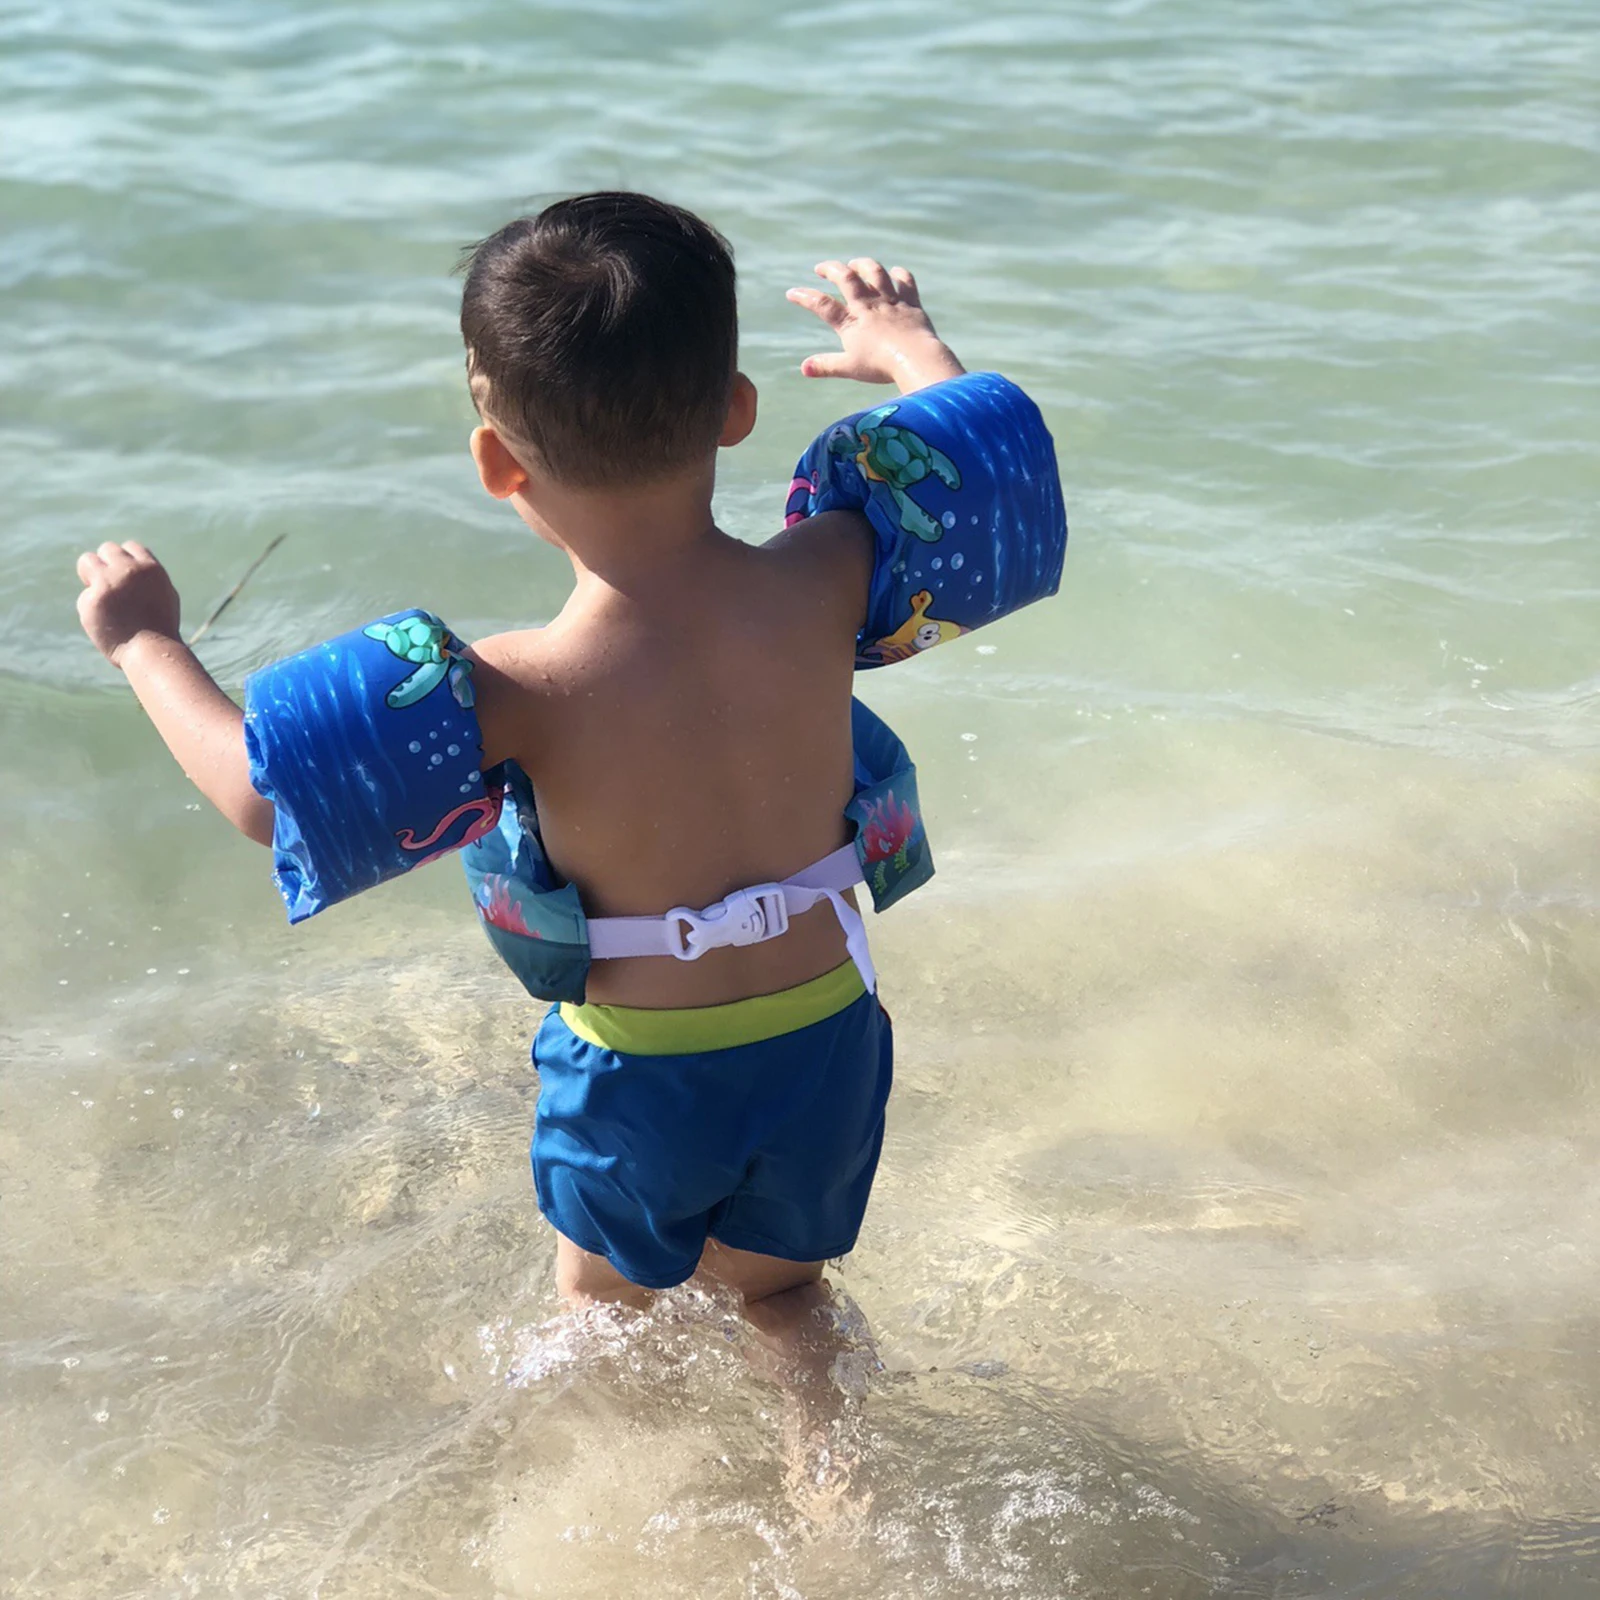 Baby Swim Life Jacket Vest with Shoulder Harness Arm Sea Beach Pool Toddler Swim Aid Floats  Kids Swim Vest for Baby Children